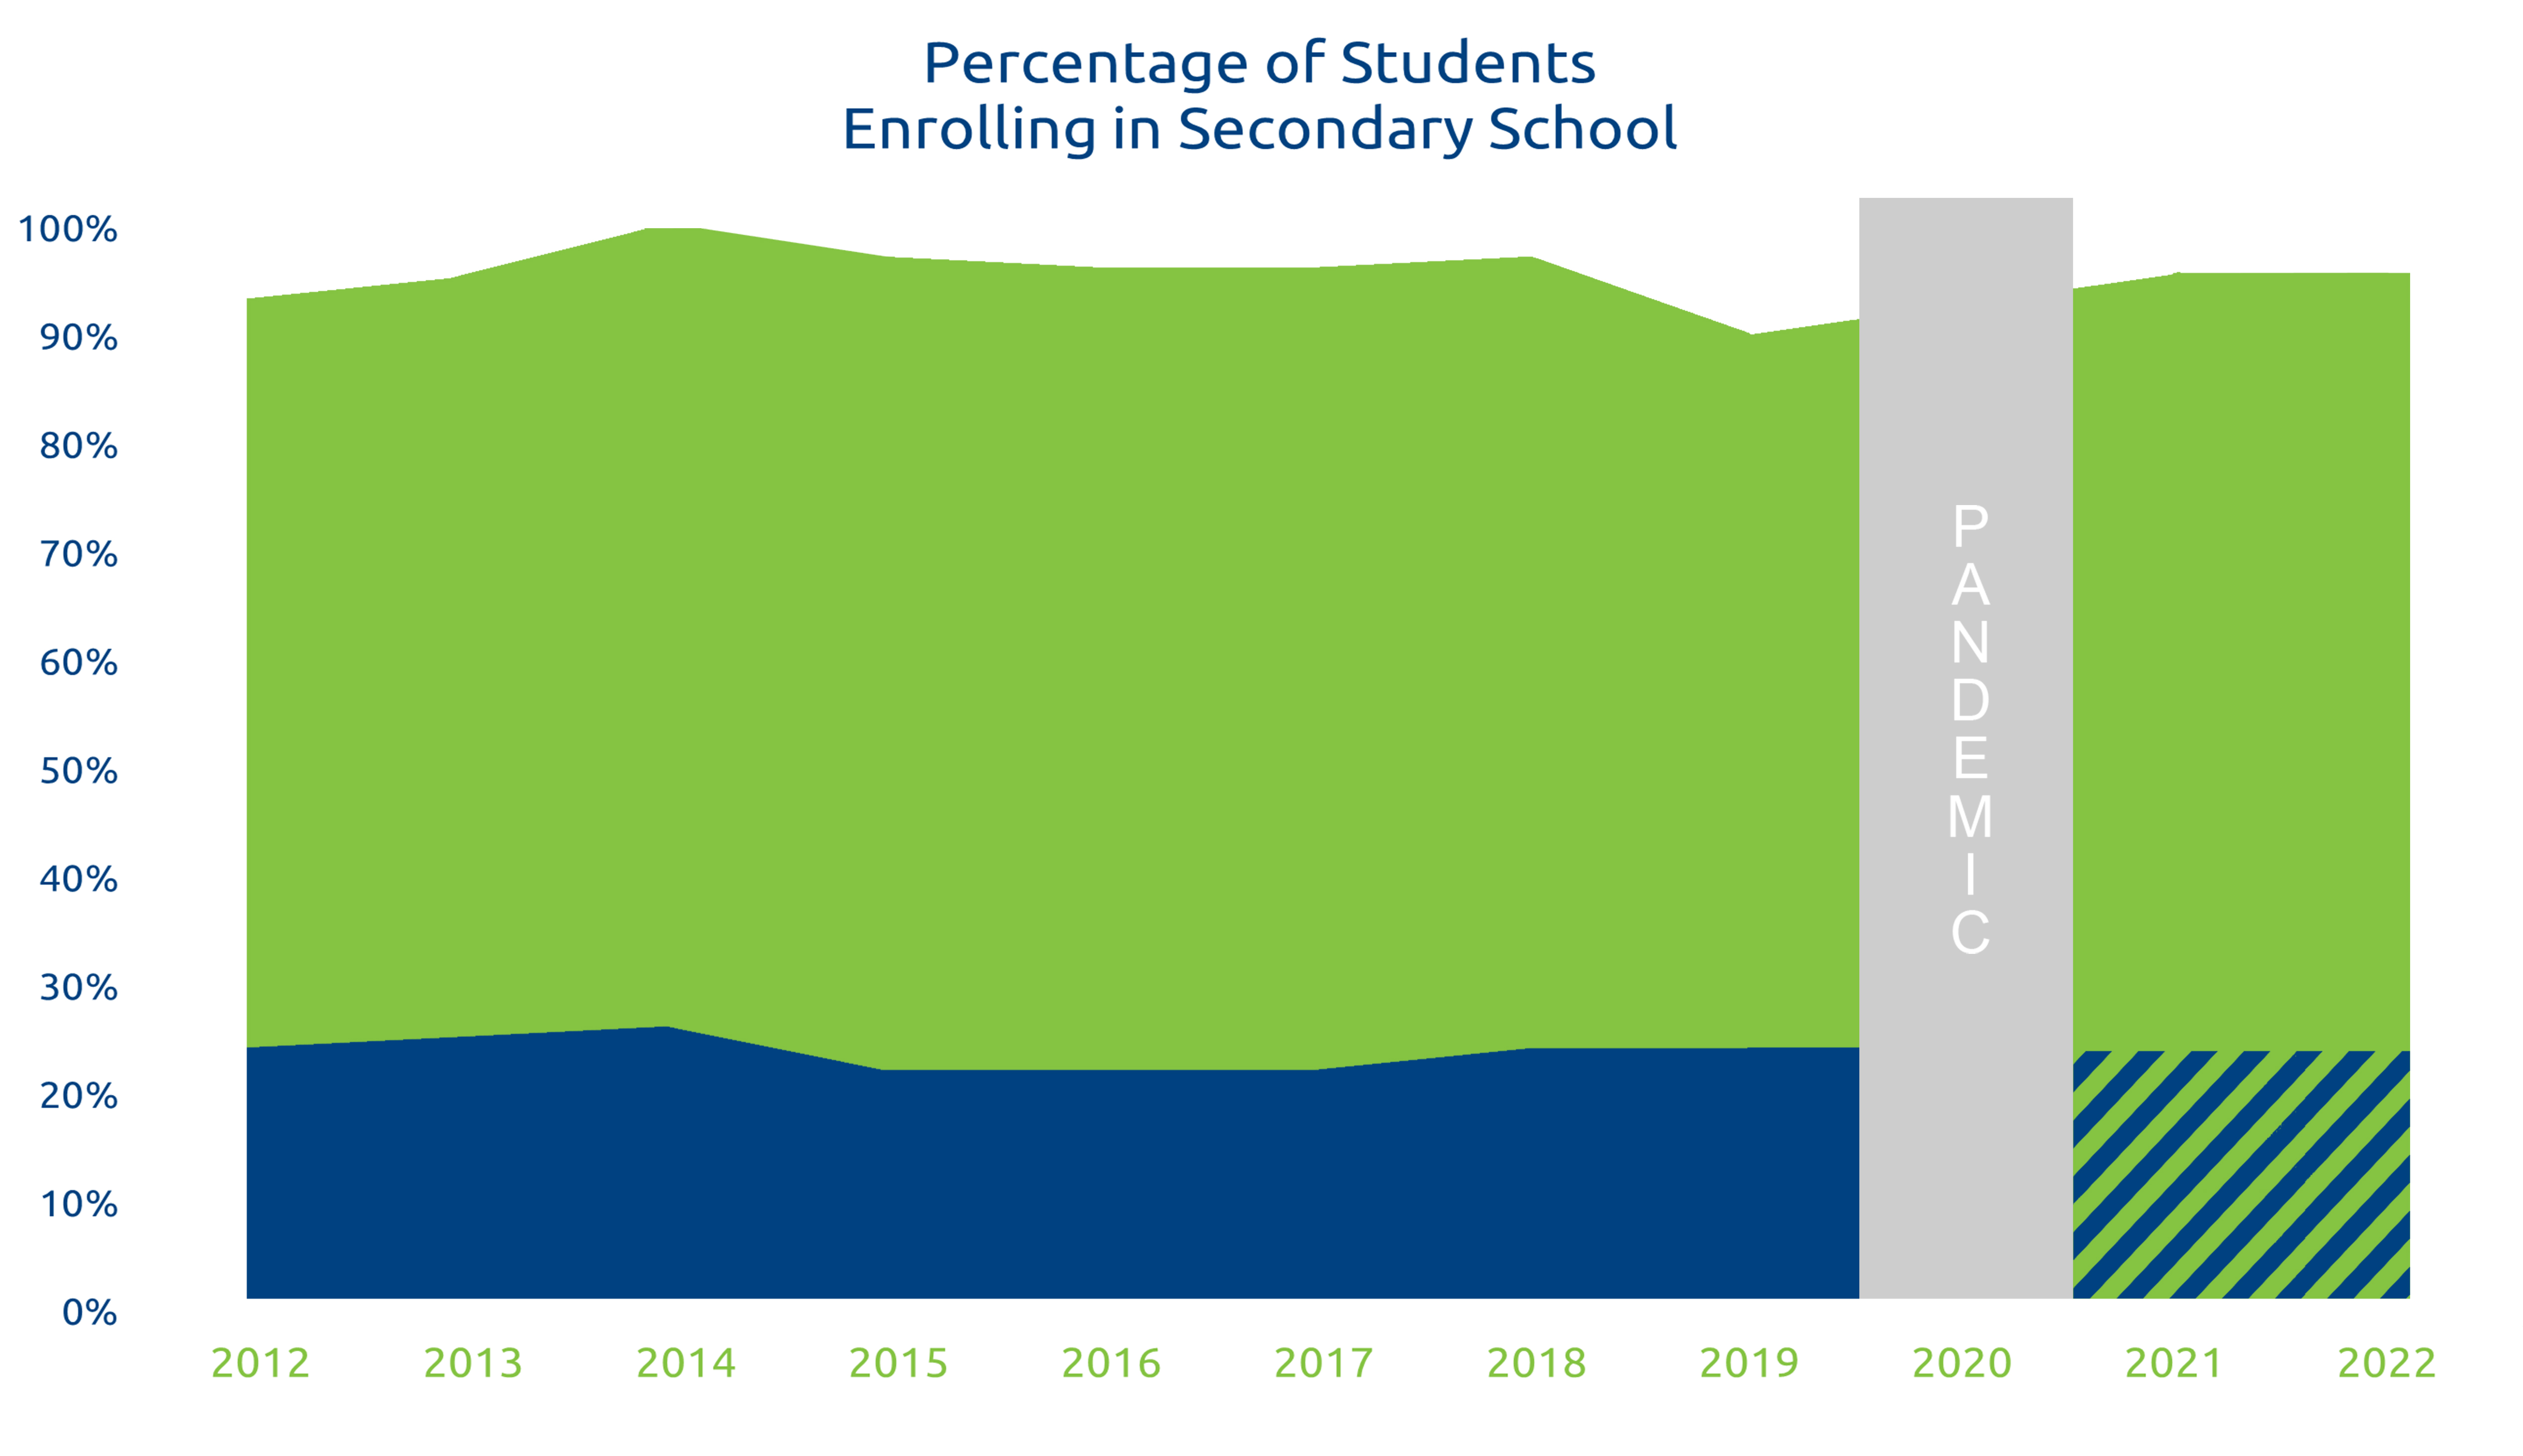 Percent enrolling in secondary school